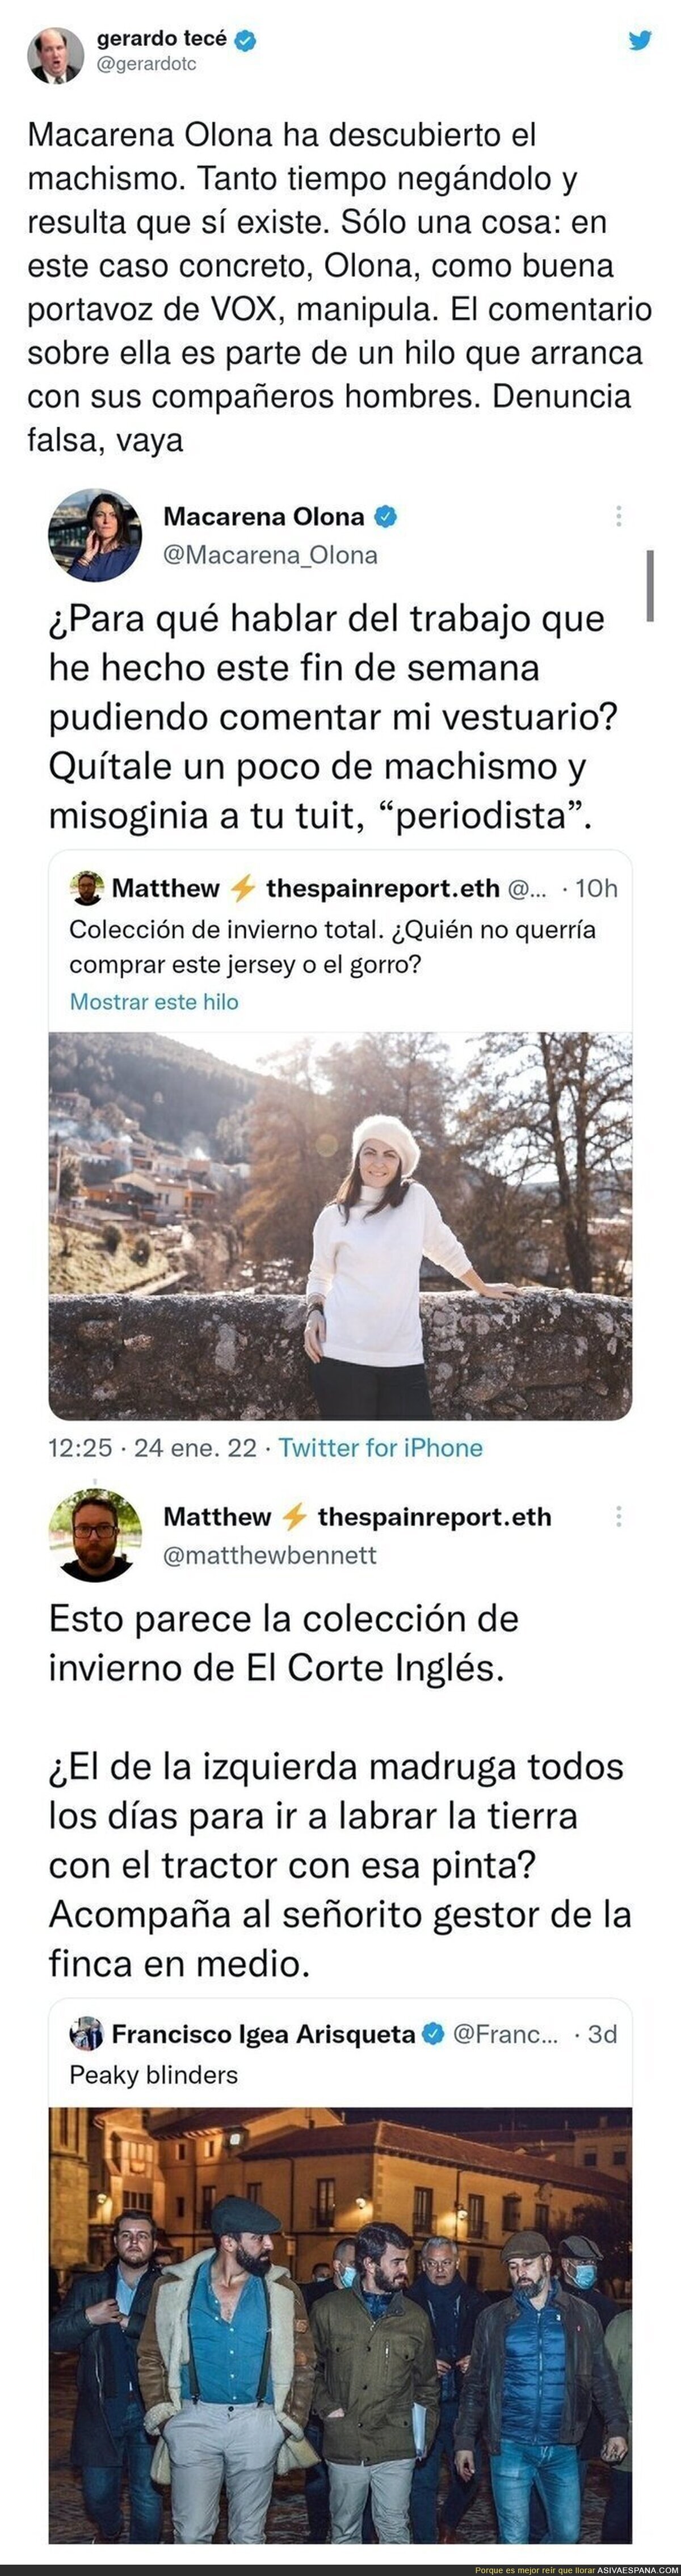 La denuncia falsa de Macarena Olona a este tuitero por hablar de su vestimenta